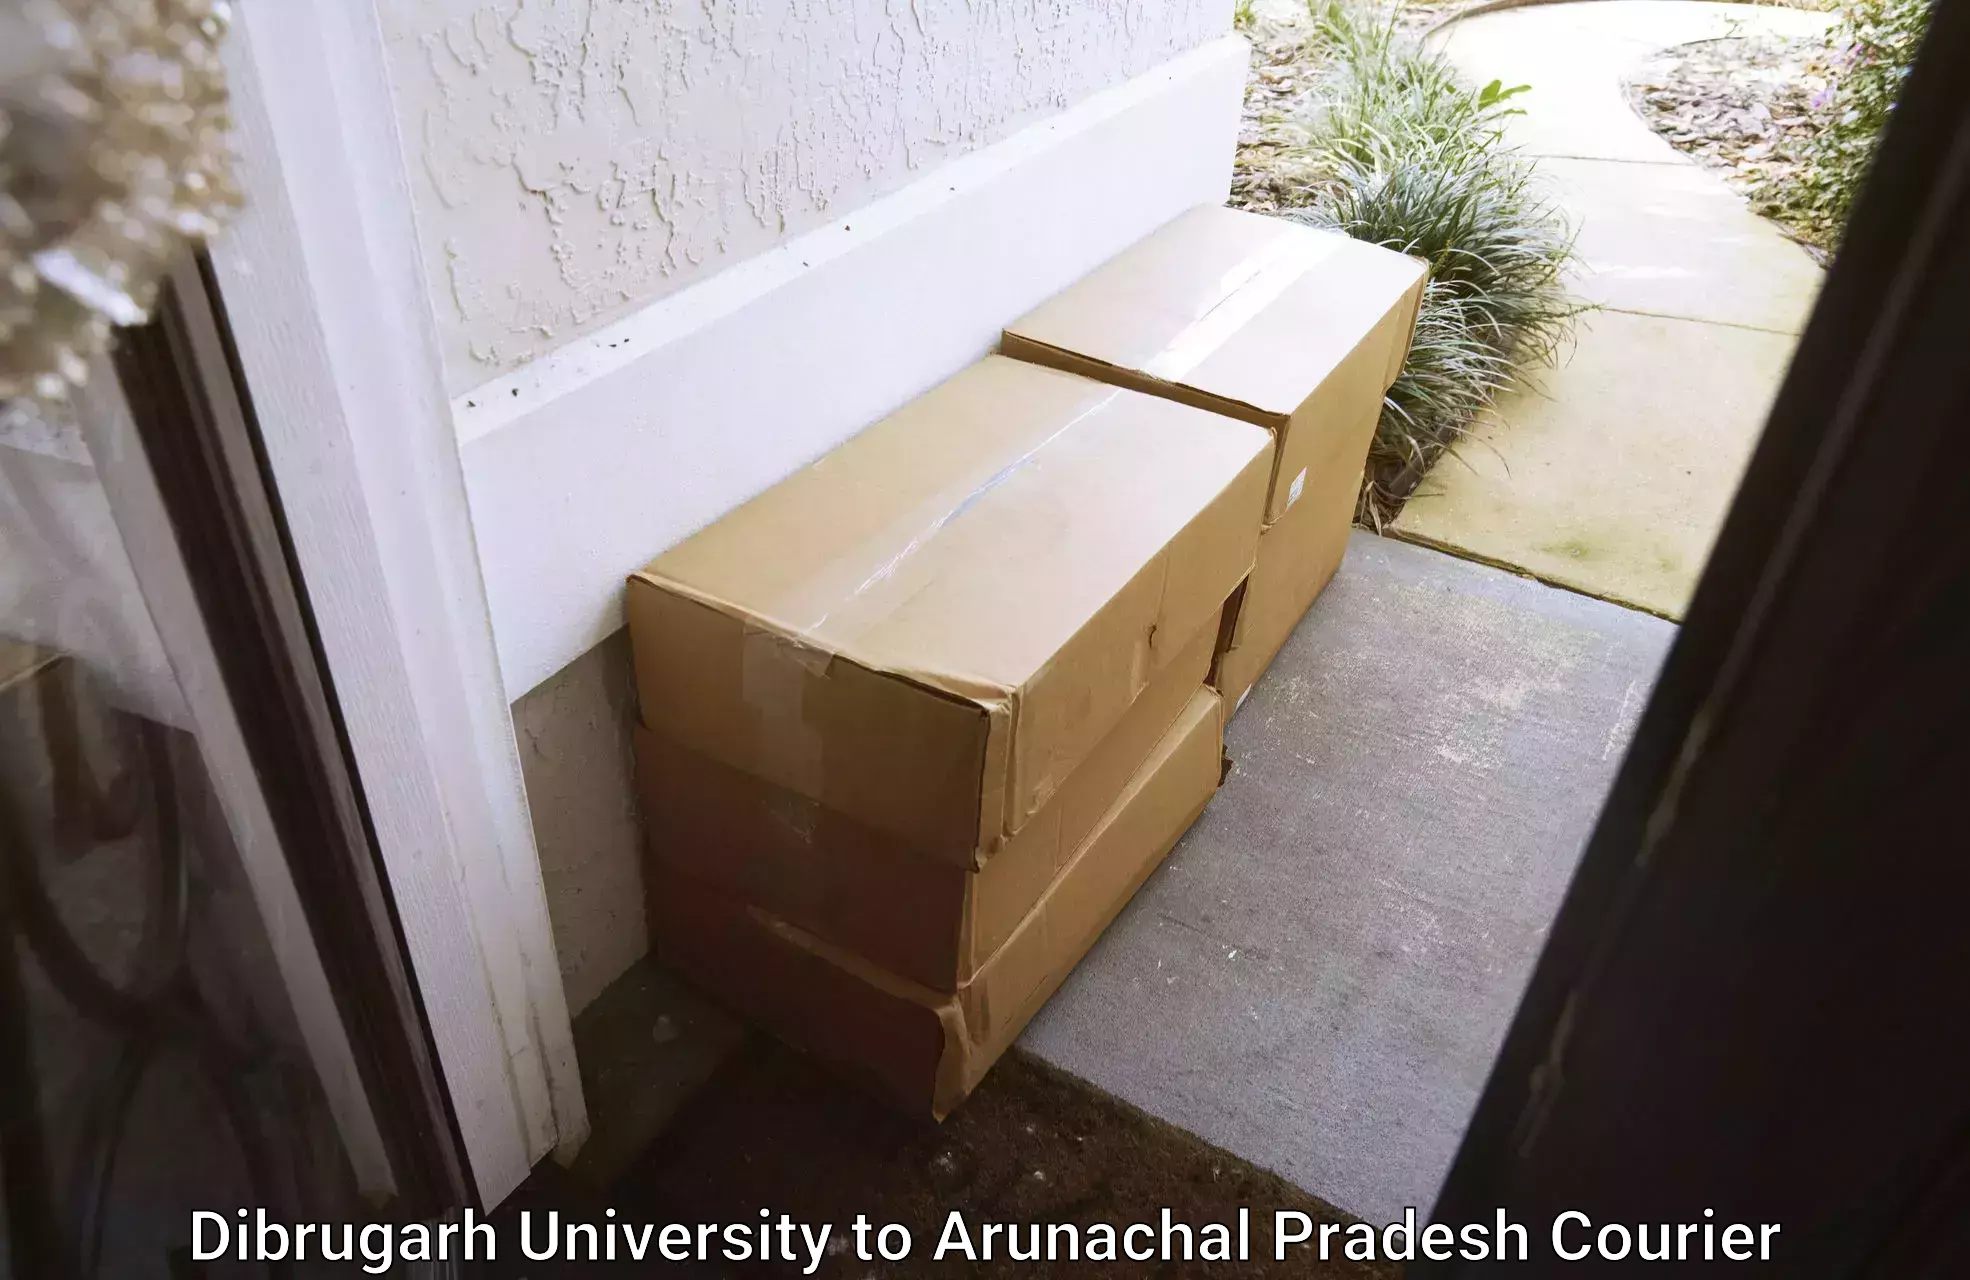 Cargo delivery service Dibrugarh University to Ziro